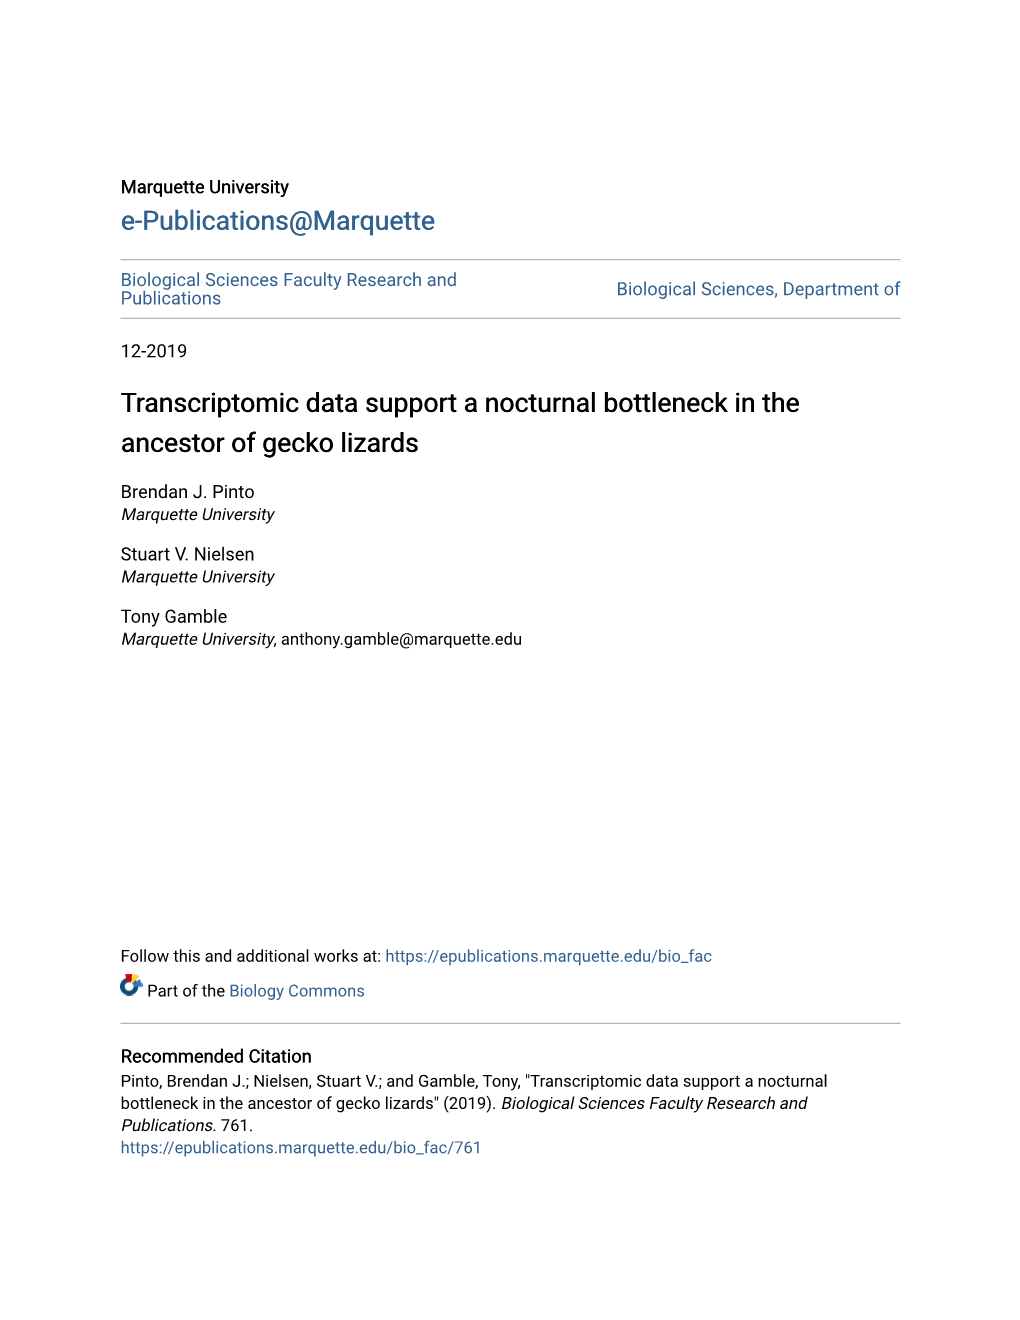 Transcriptomic Data Support a Nocturnal Bottleneck in the Ancestor of Gecko Lizards